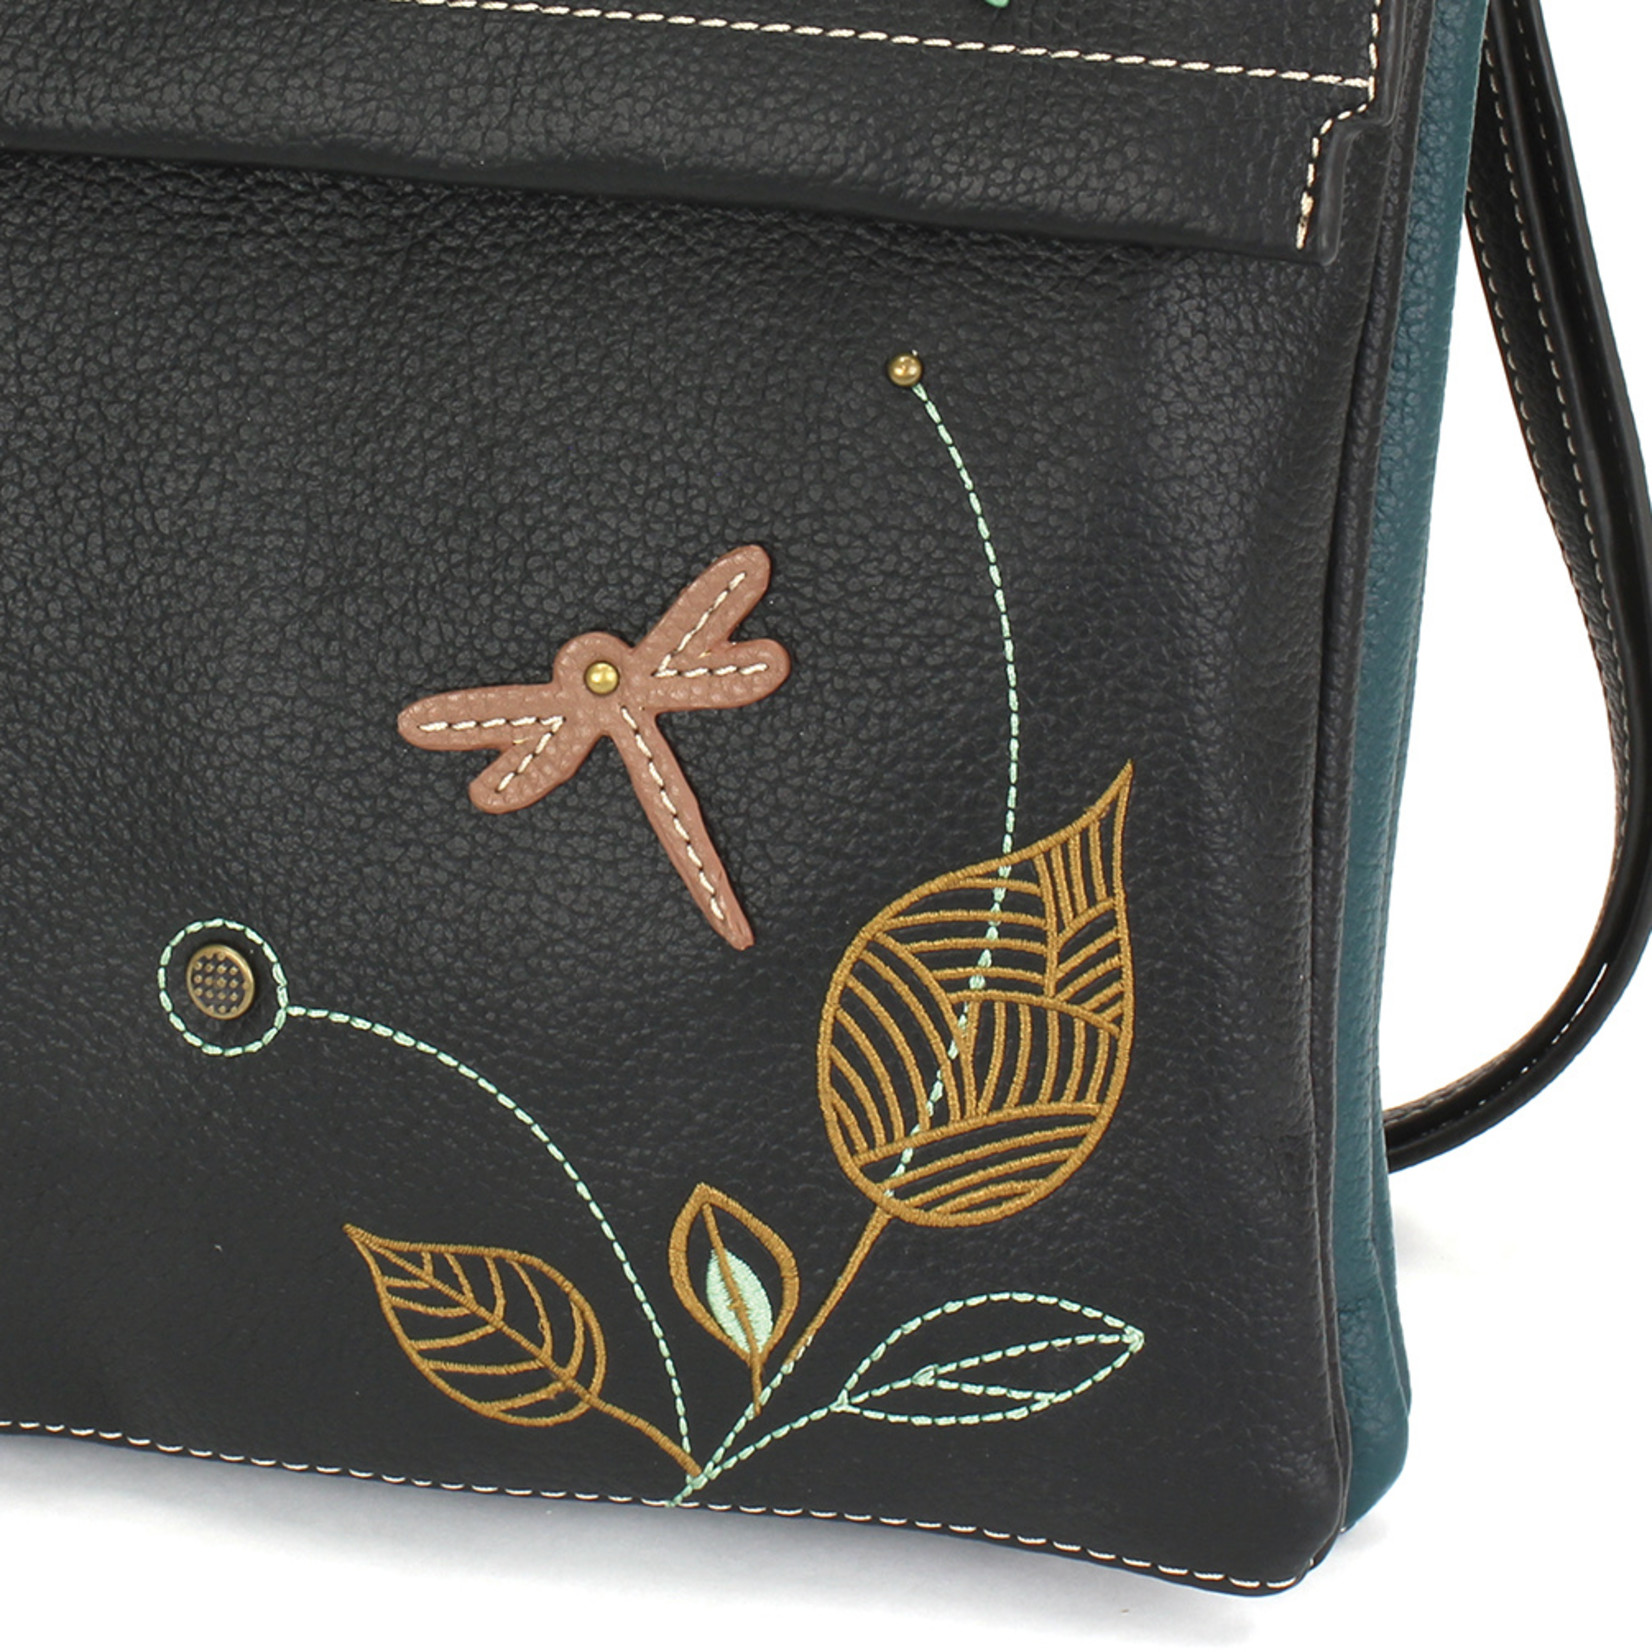 Chala Criss Messenger Bag - Dragonfly